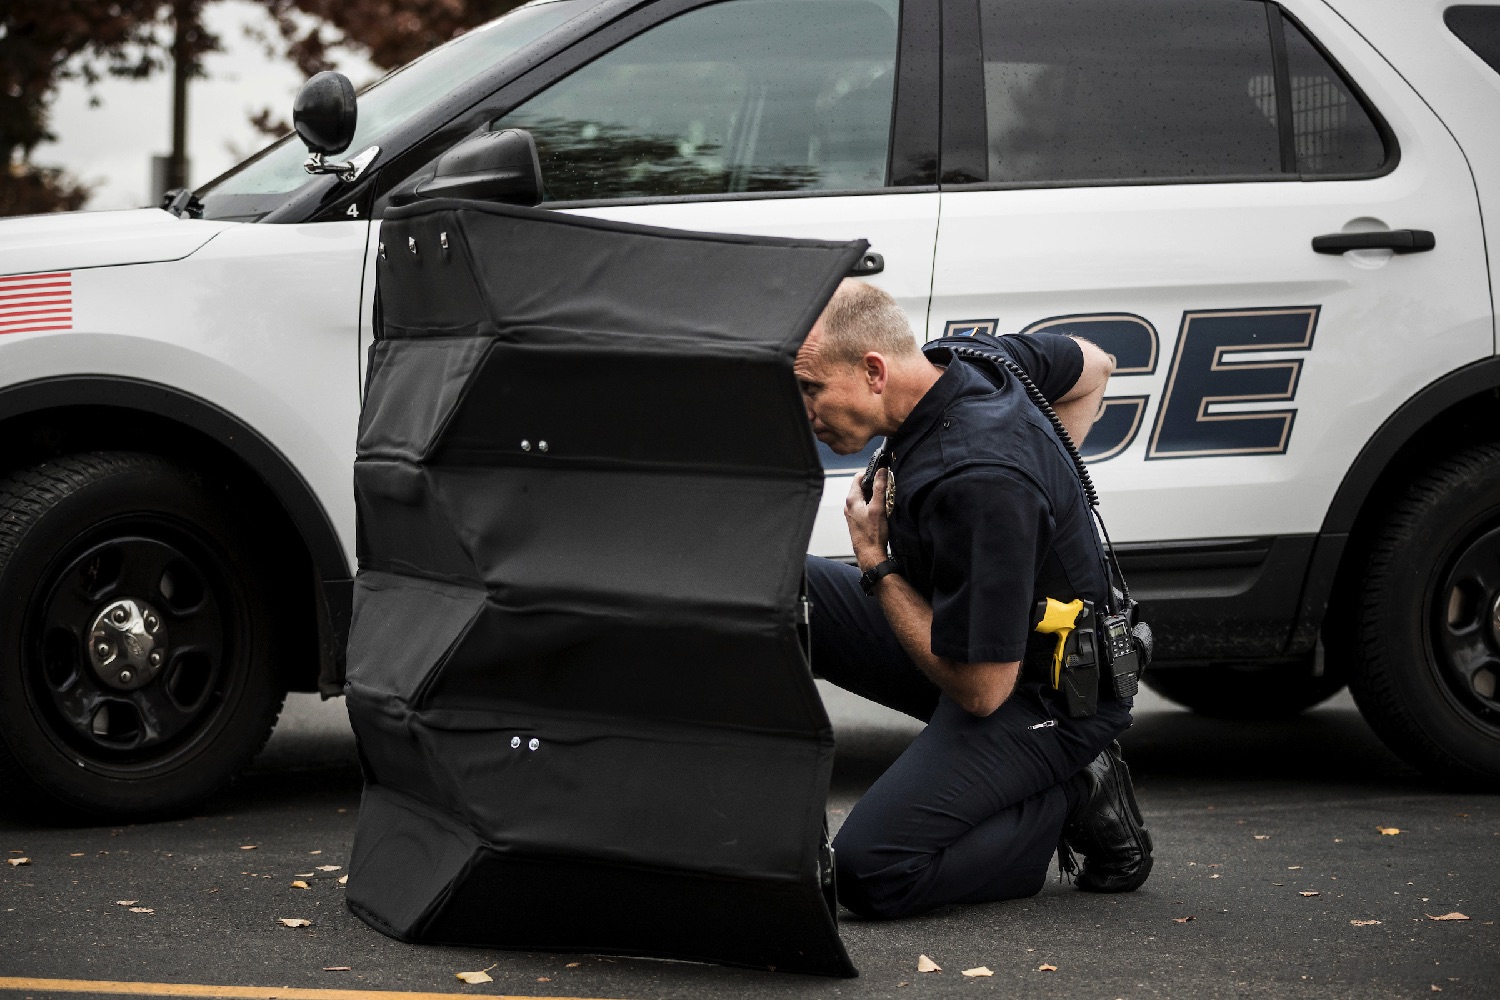 origami shield cops ballisticbarrier1